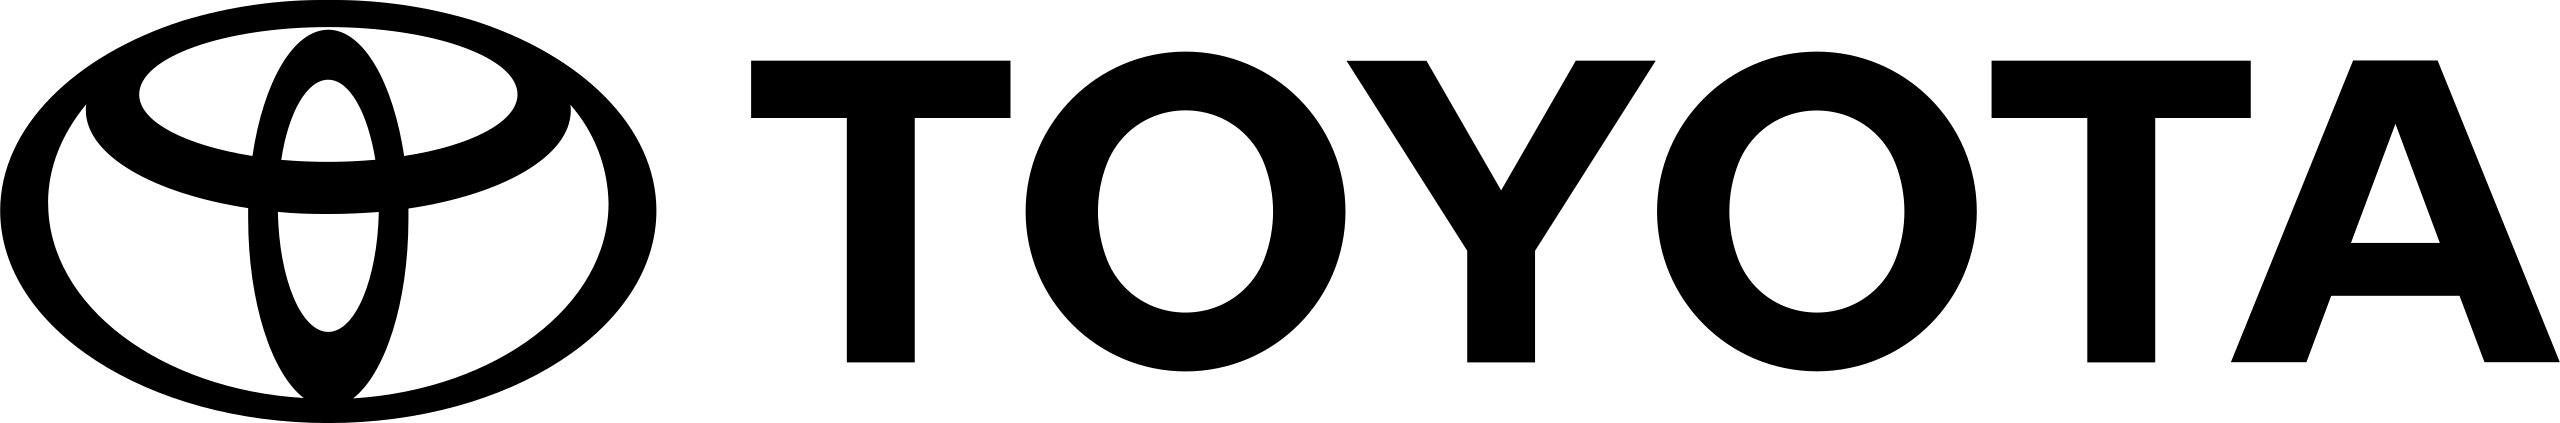 File:LATAM Cargo logo.svg - Wikipedia